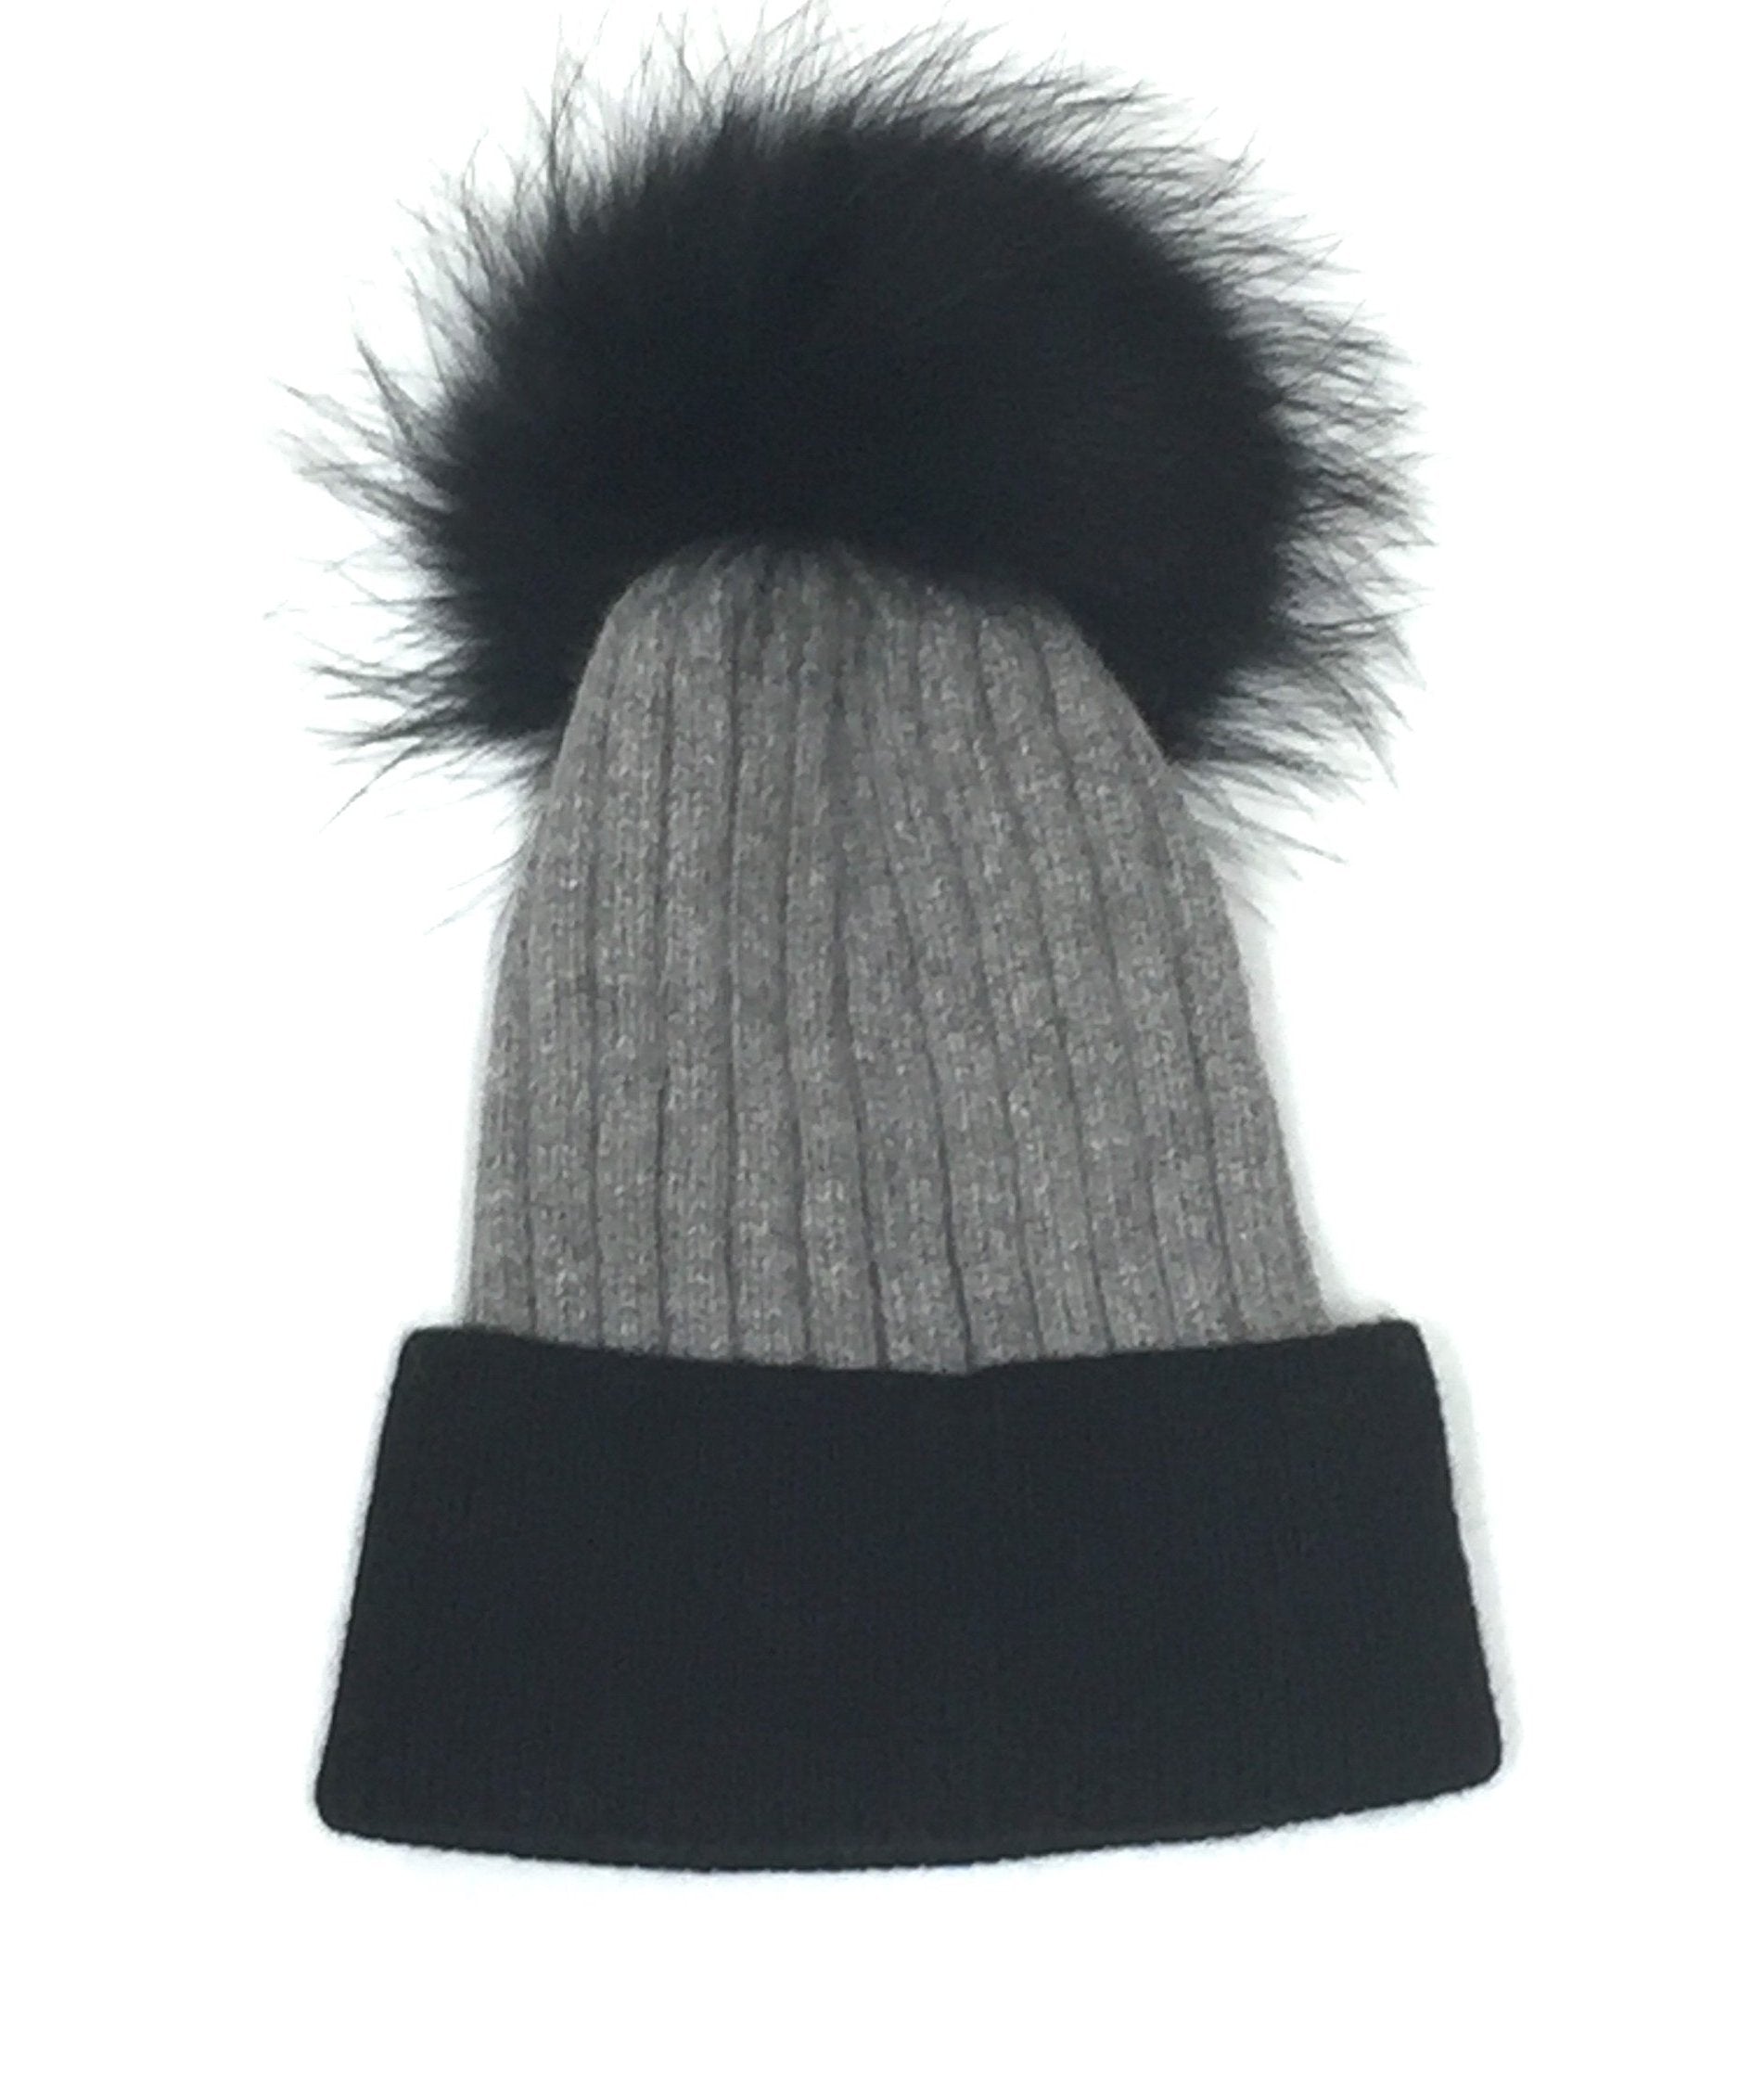 vermont hat black/gray/black